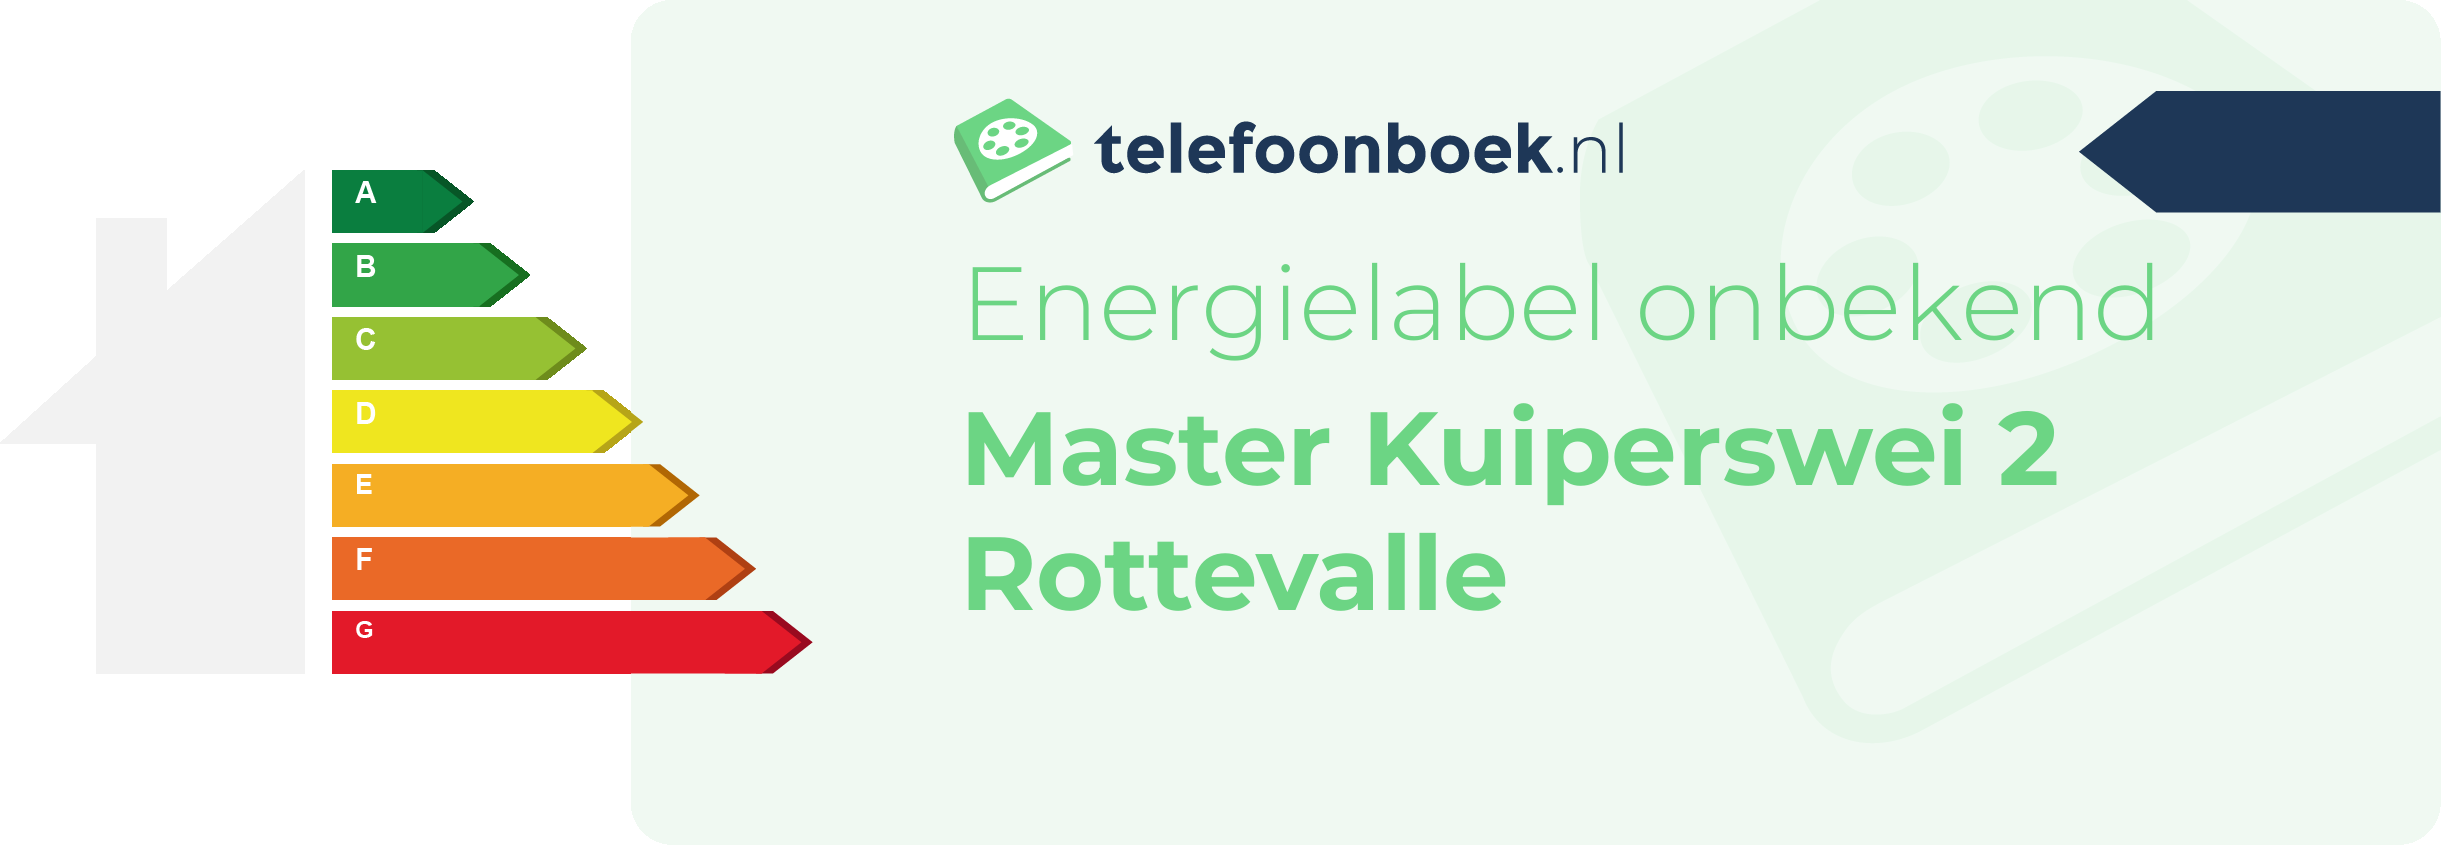 Energielabel Master Kuiperswei 2 Rottevalle